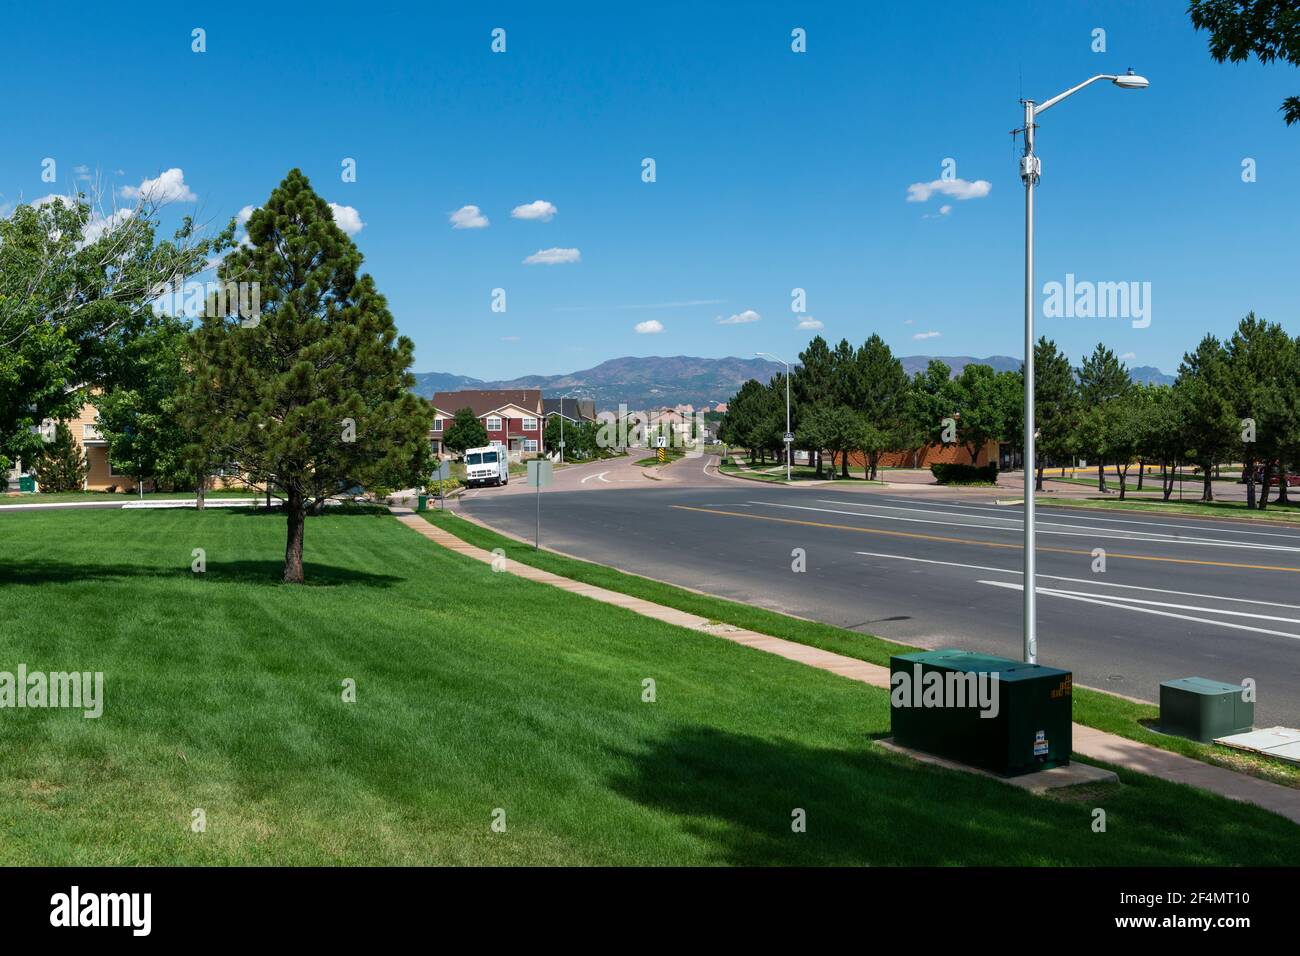 Colorado Springs, Colorado - 10. Juli 2014: Blick auf eine Vorstadtgegend am Stadtrand von Colorado Springs, im Bundesstaat Colorad Stockfoto